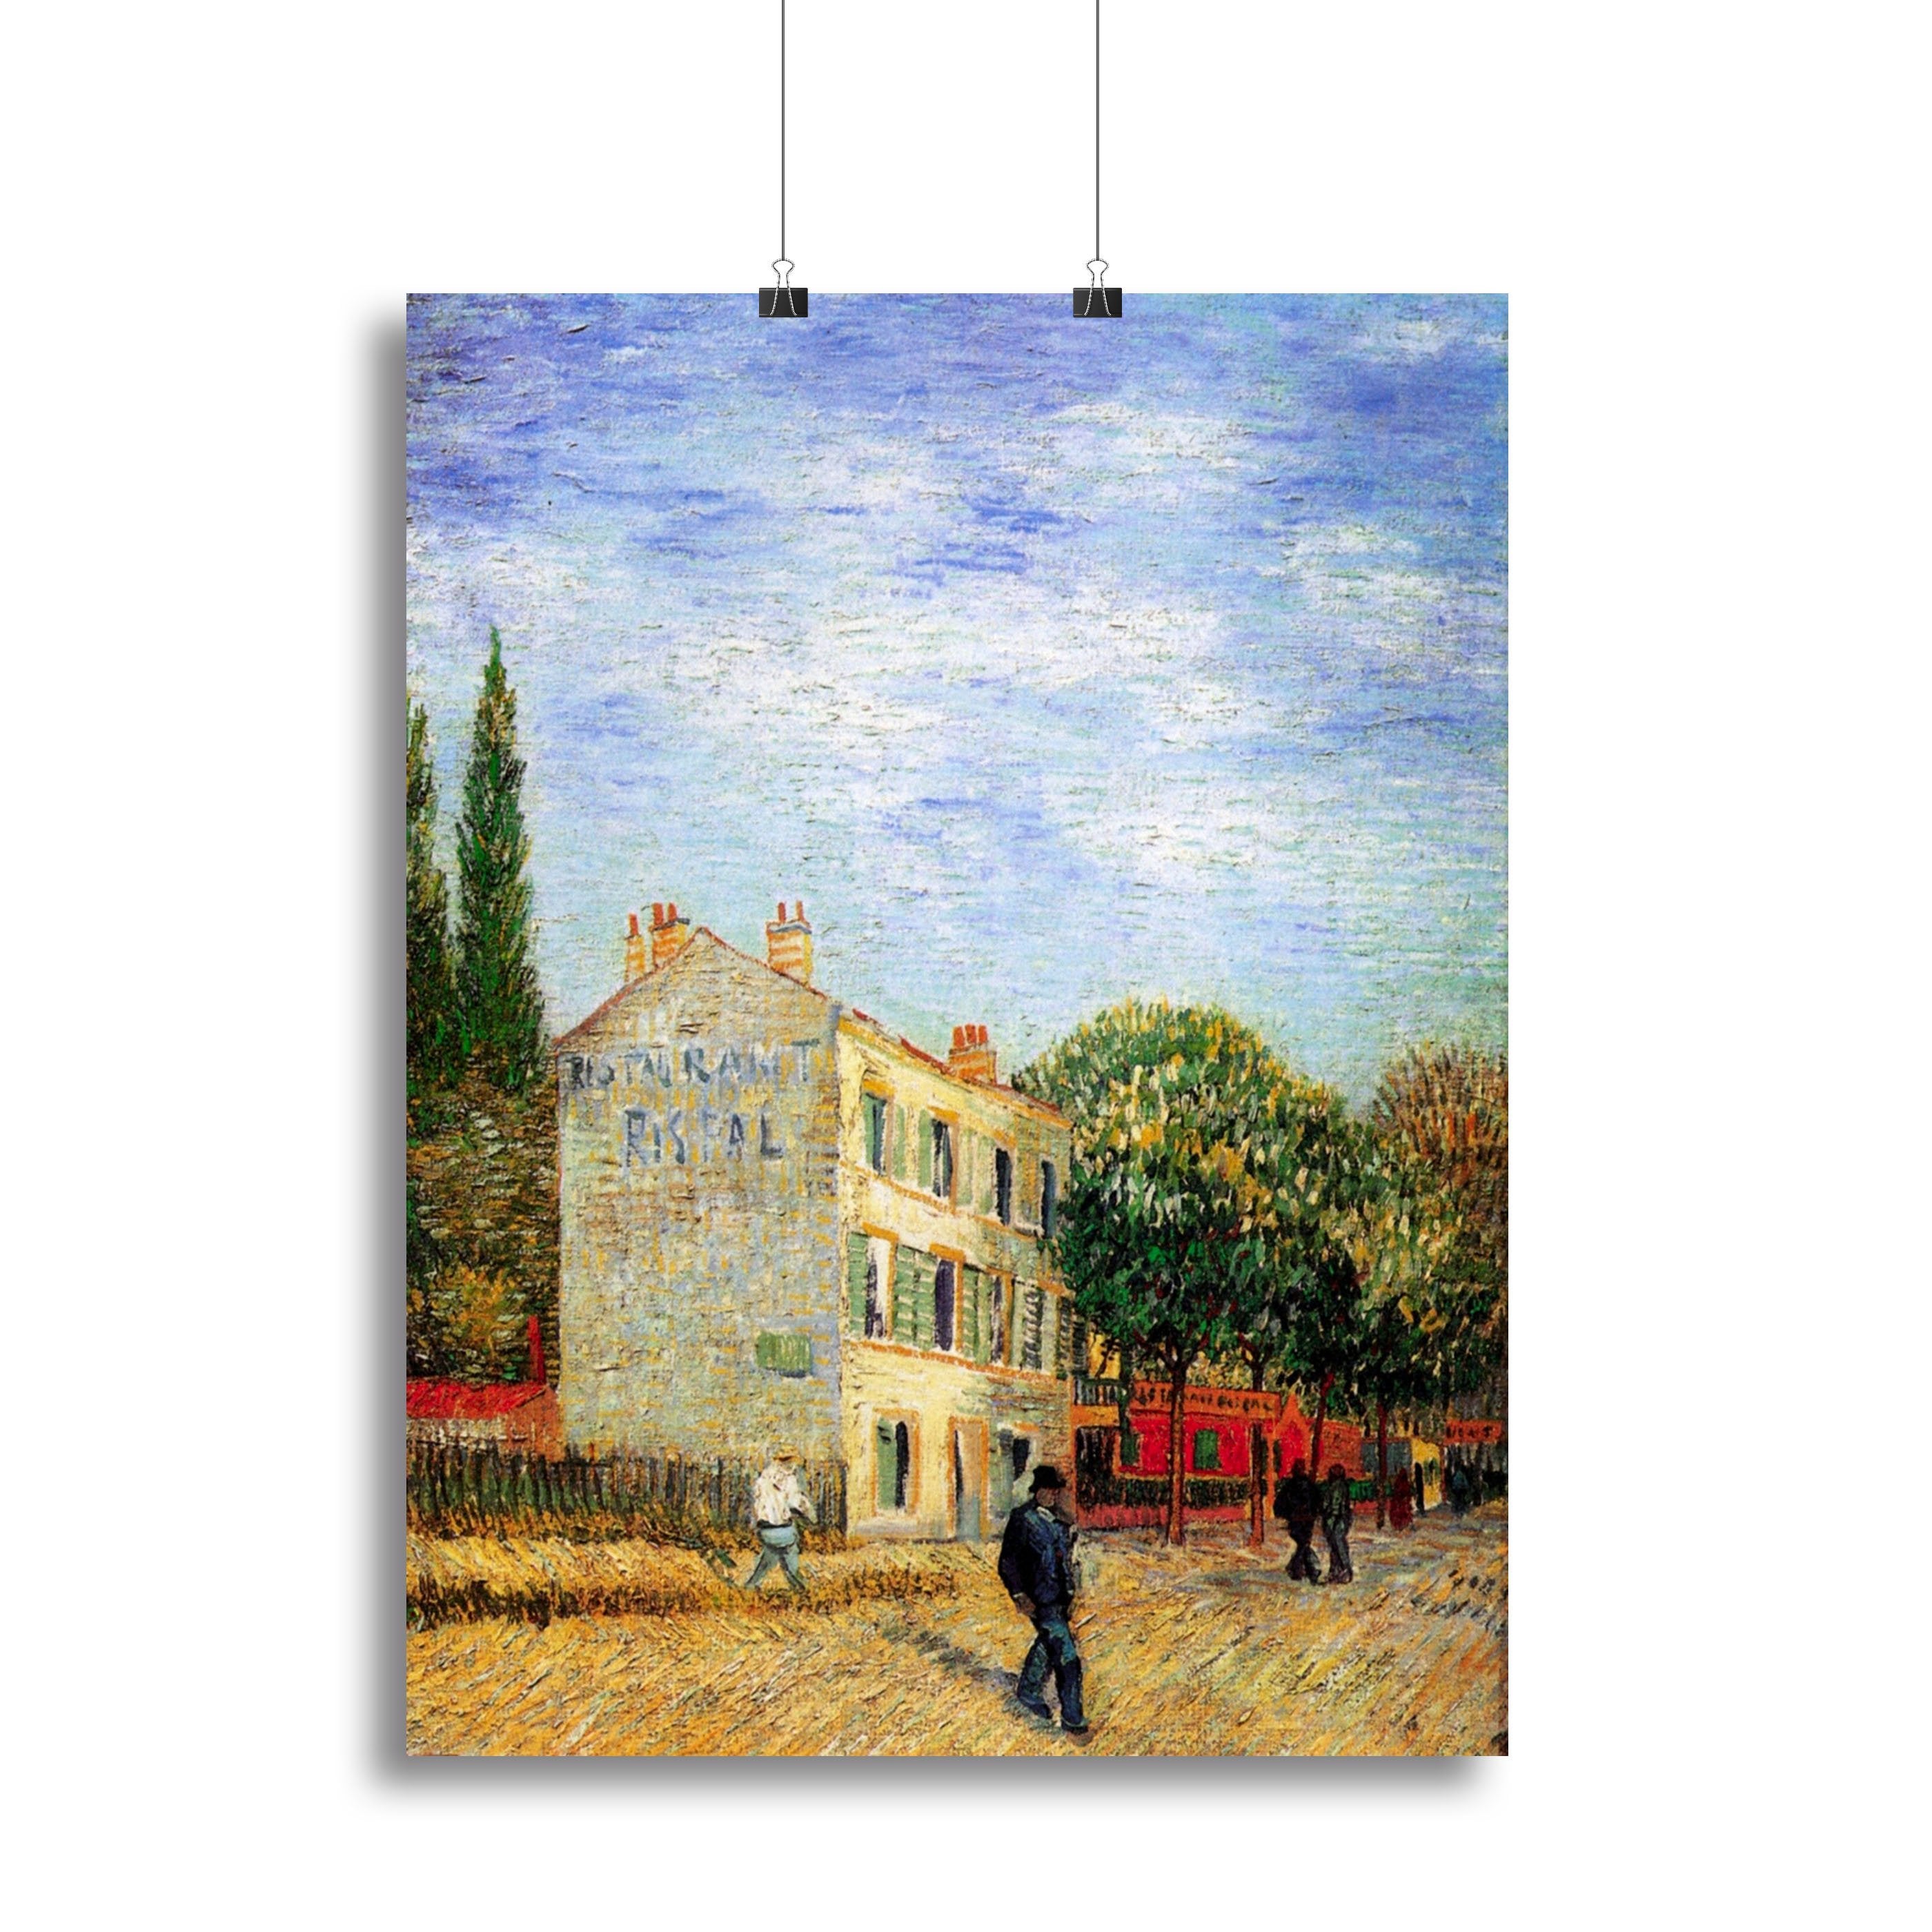 The Rispal Restaurant at Asnieres by Van Gogh Canvas Print or Poster